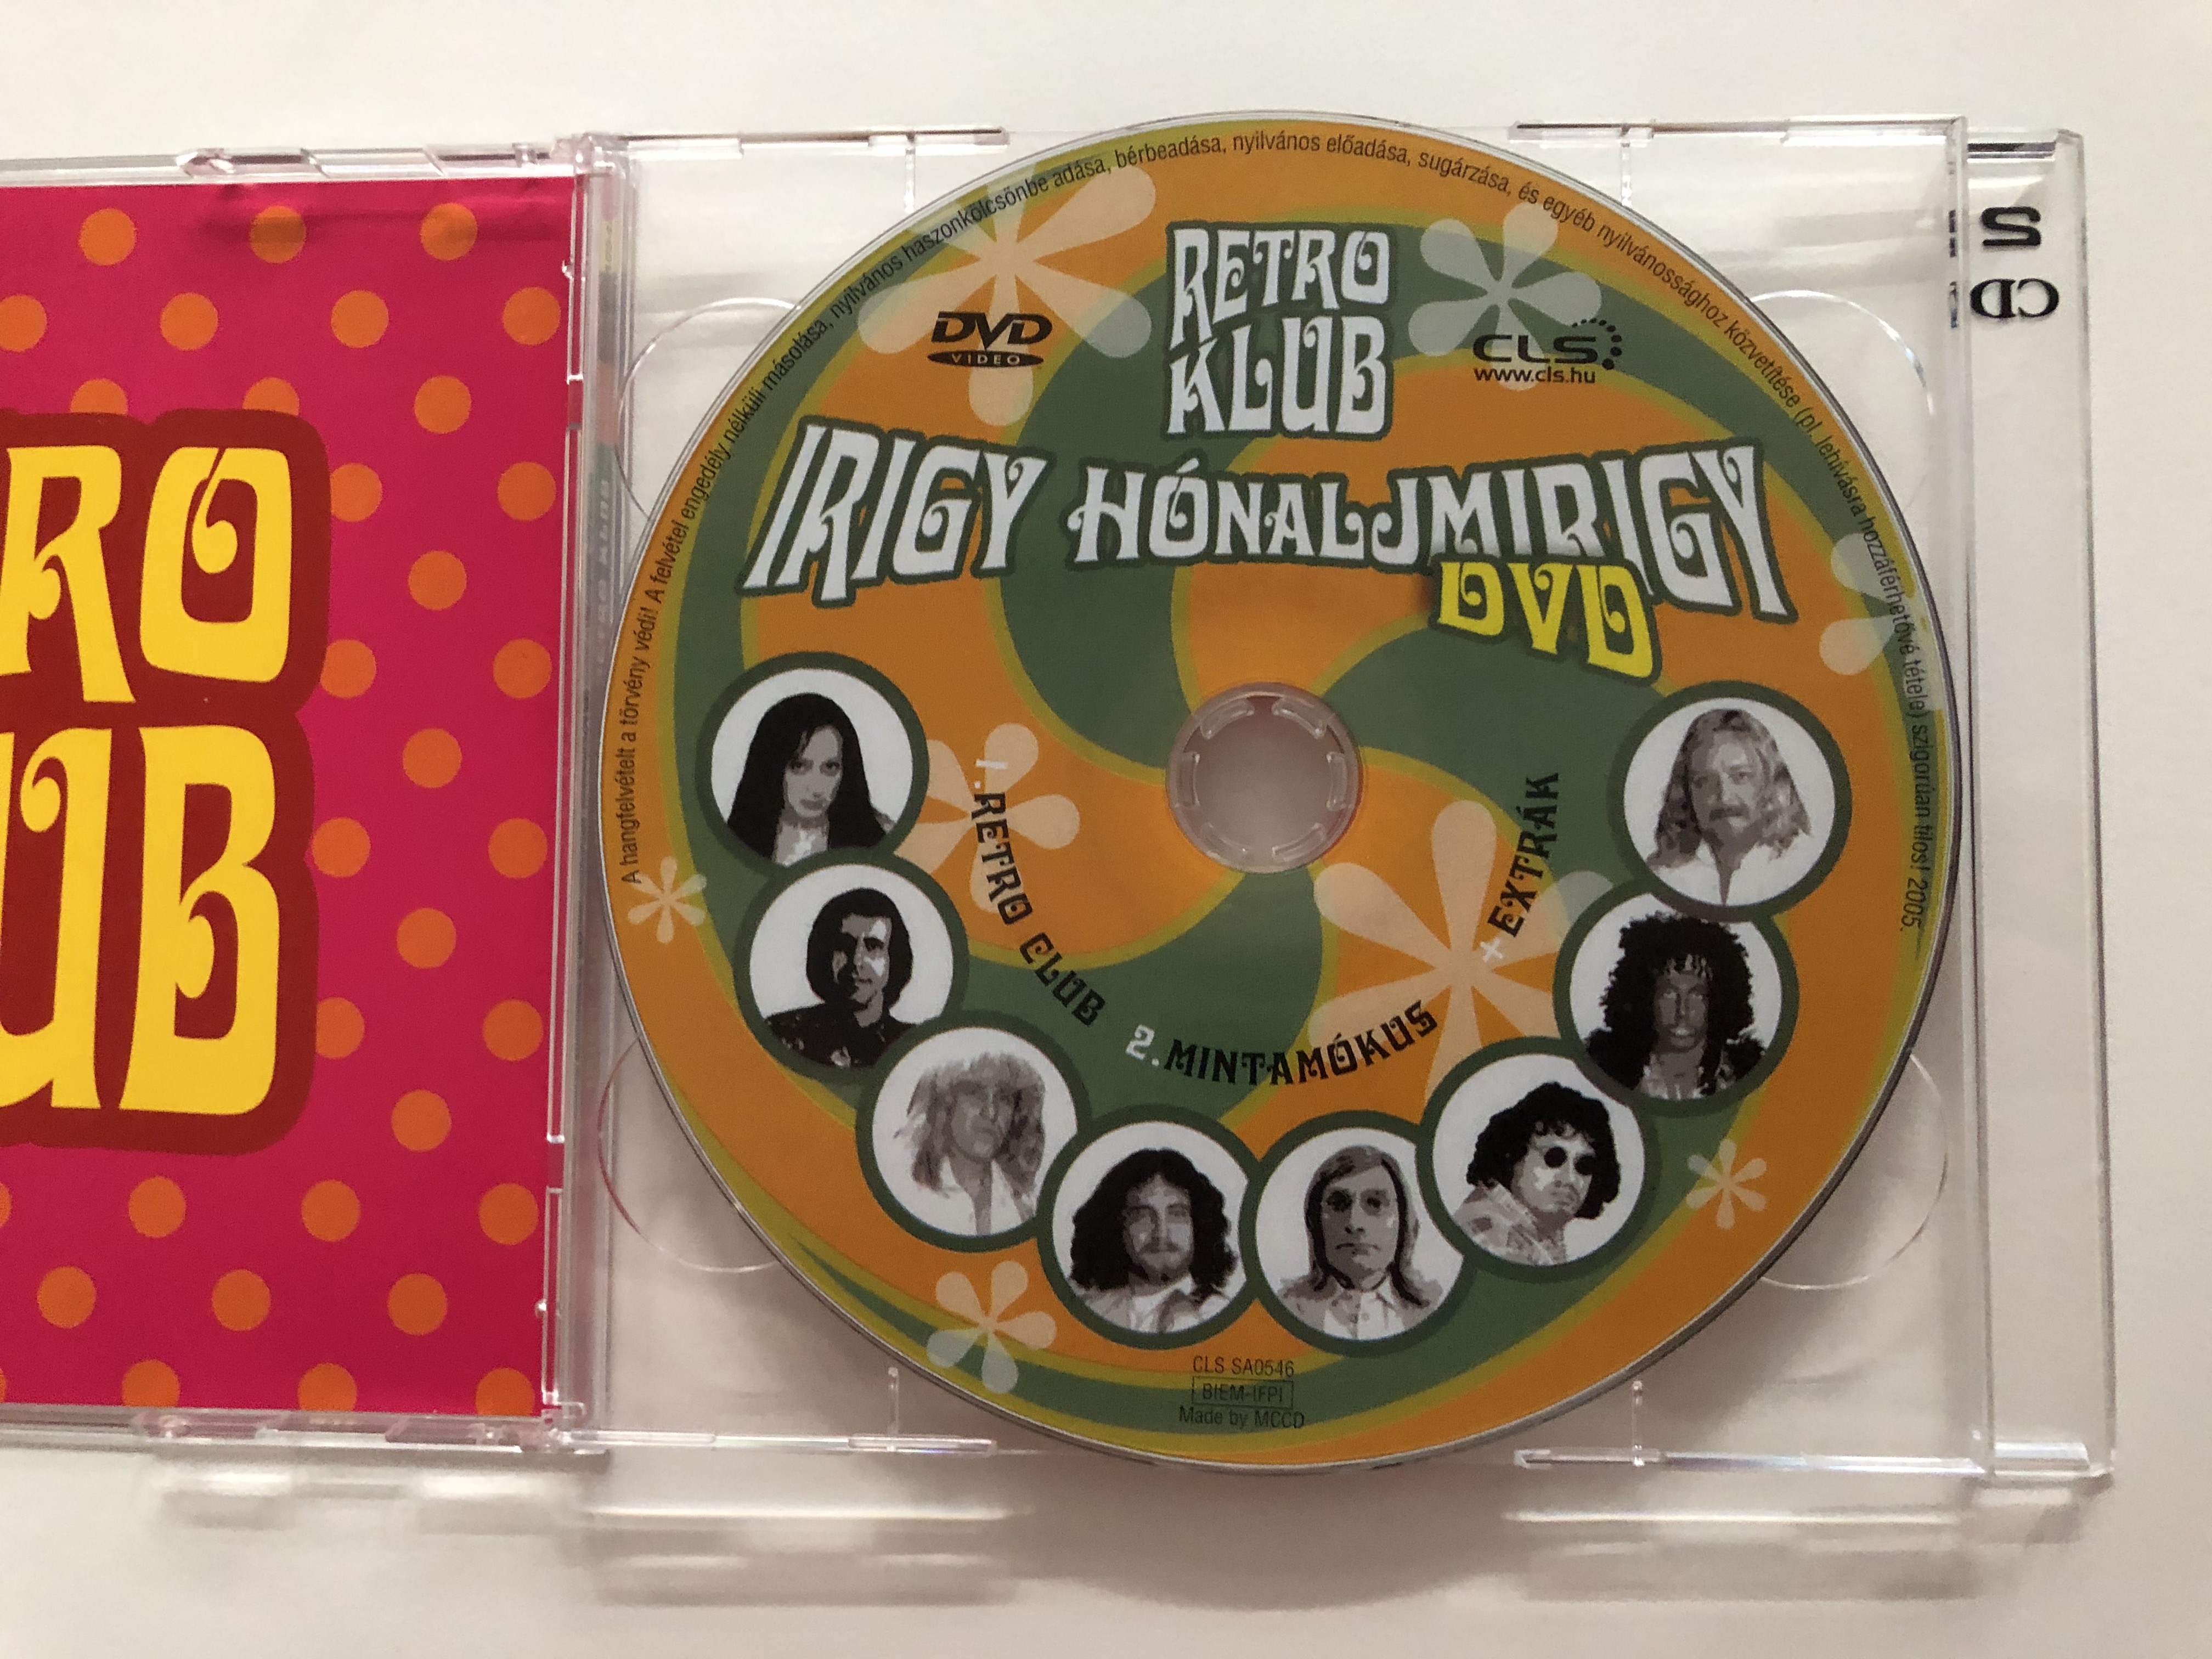 irigy-h-naljmirigy-retro-klub-ajandek-dvd-cls-records-audio-cd-dvd-cd-cls-sa0542-7-.jpg